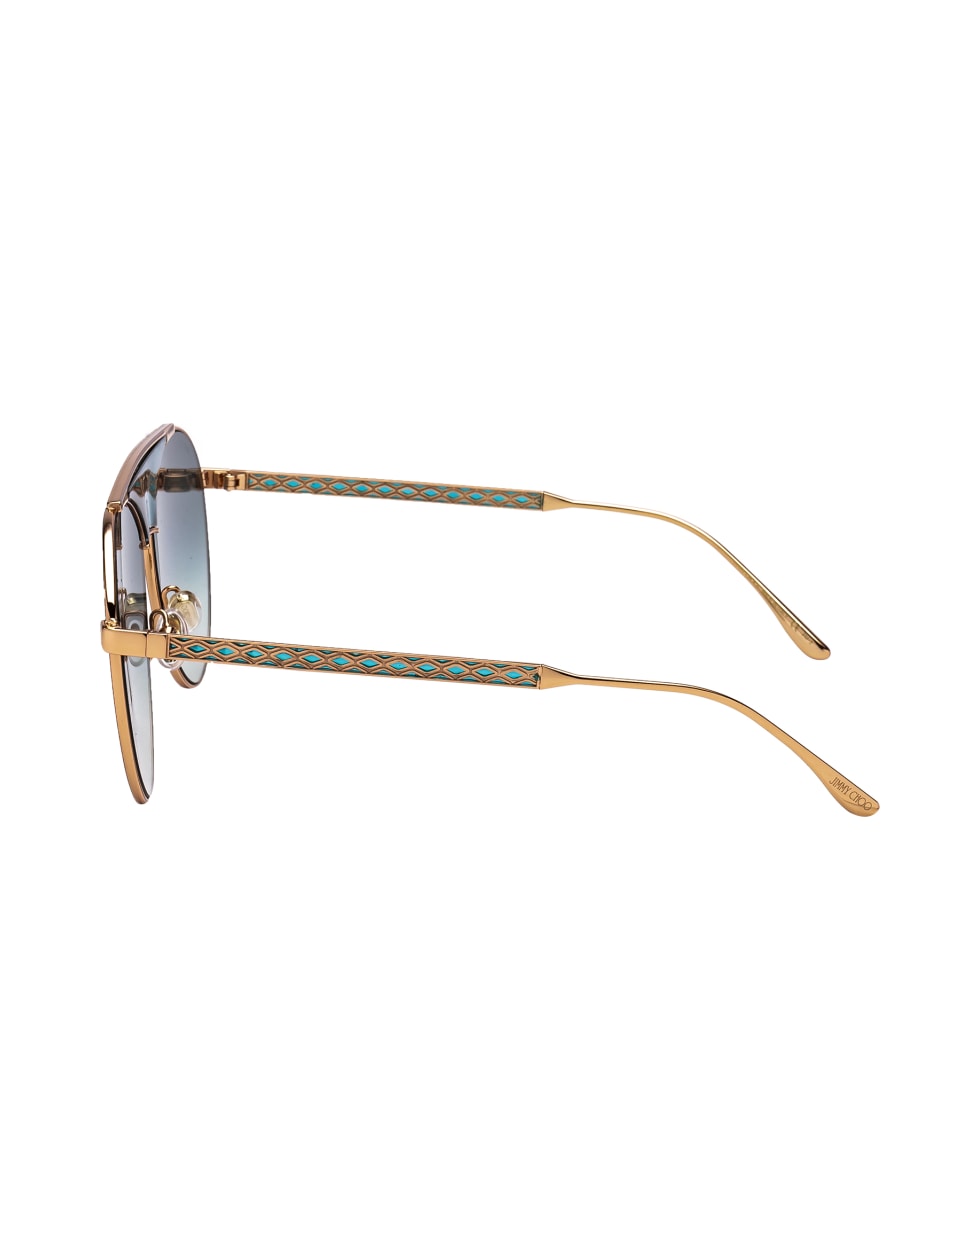 Jimmy Choo Eyewear Ave/s Sunglasses - PEFEZ GOLD GREEN